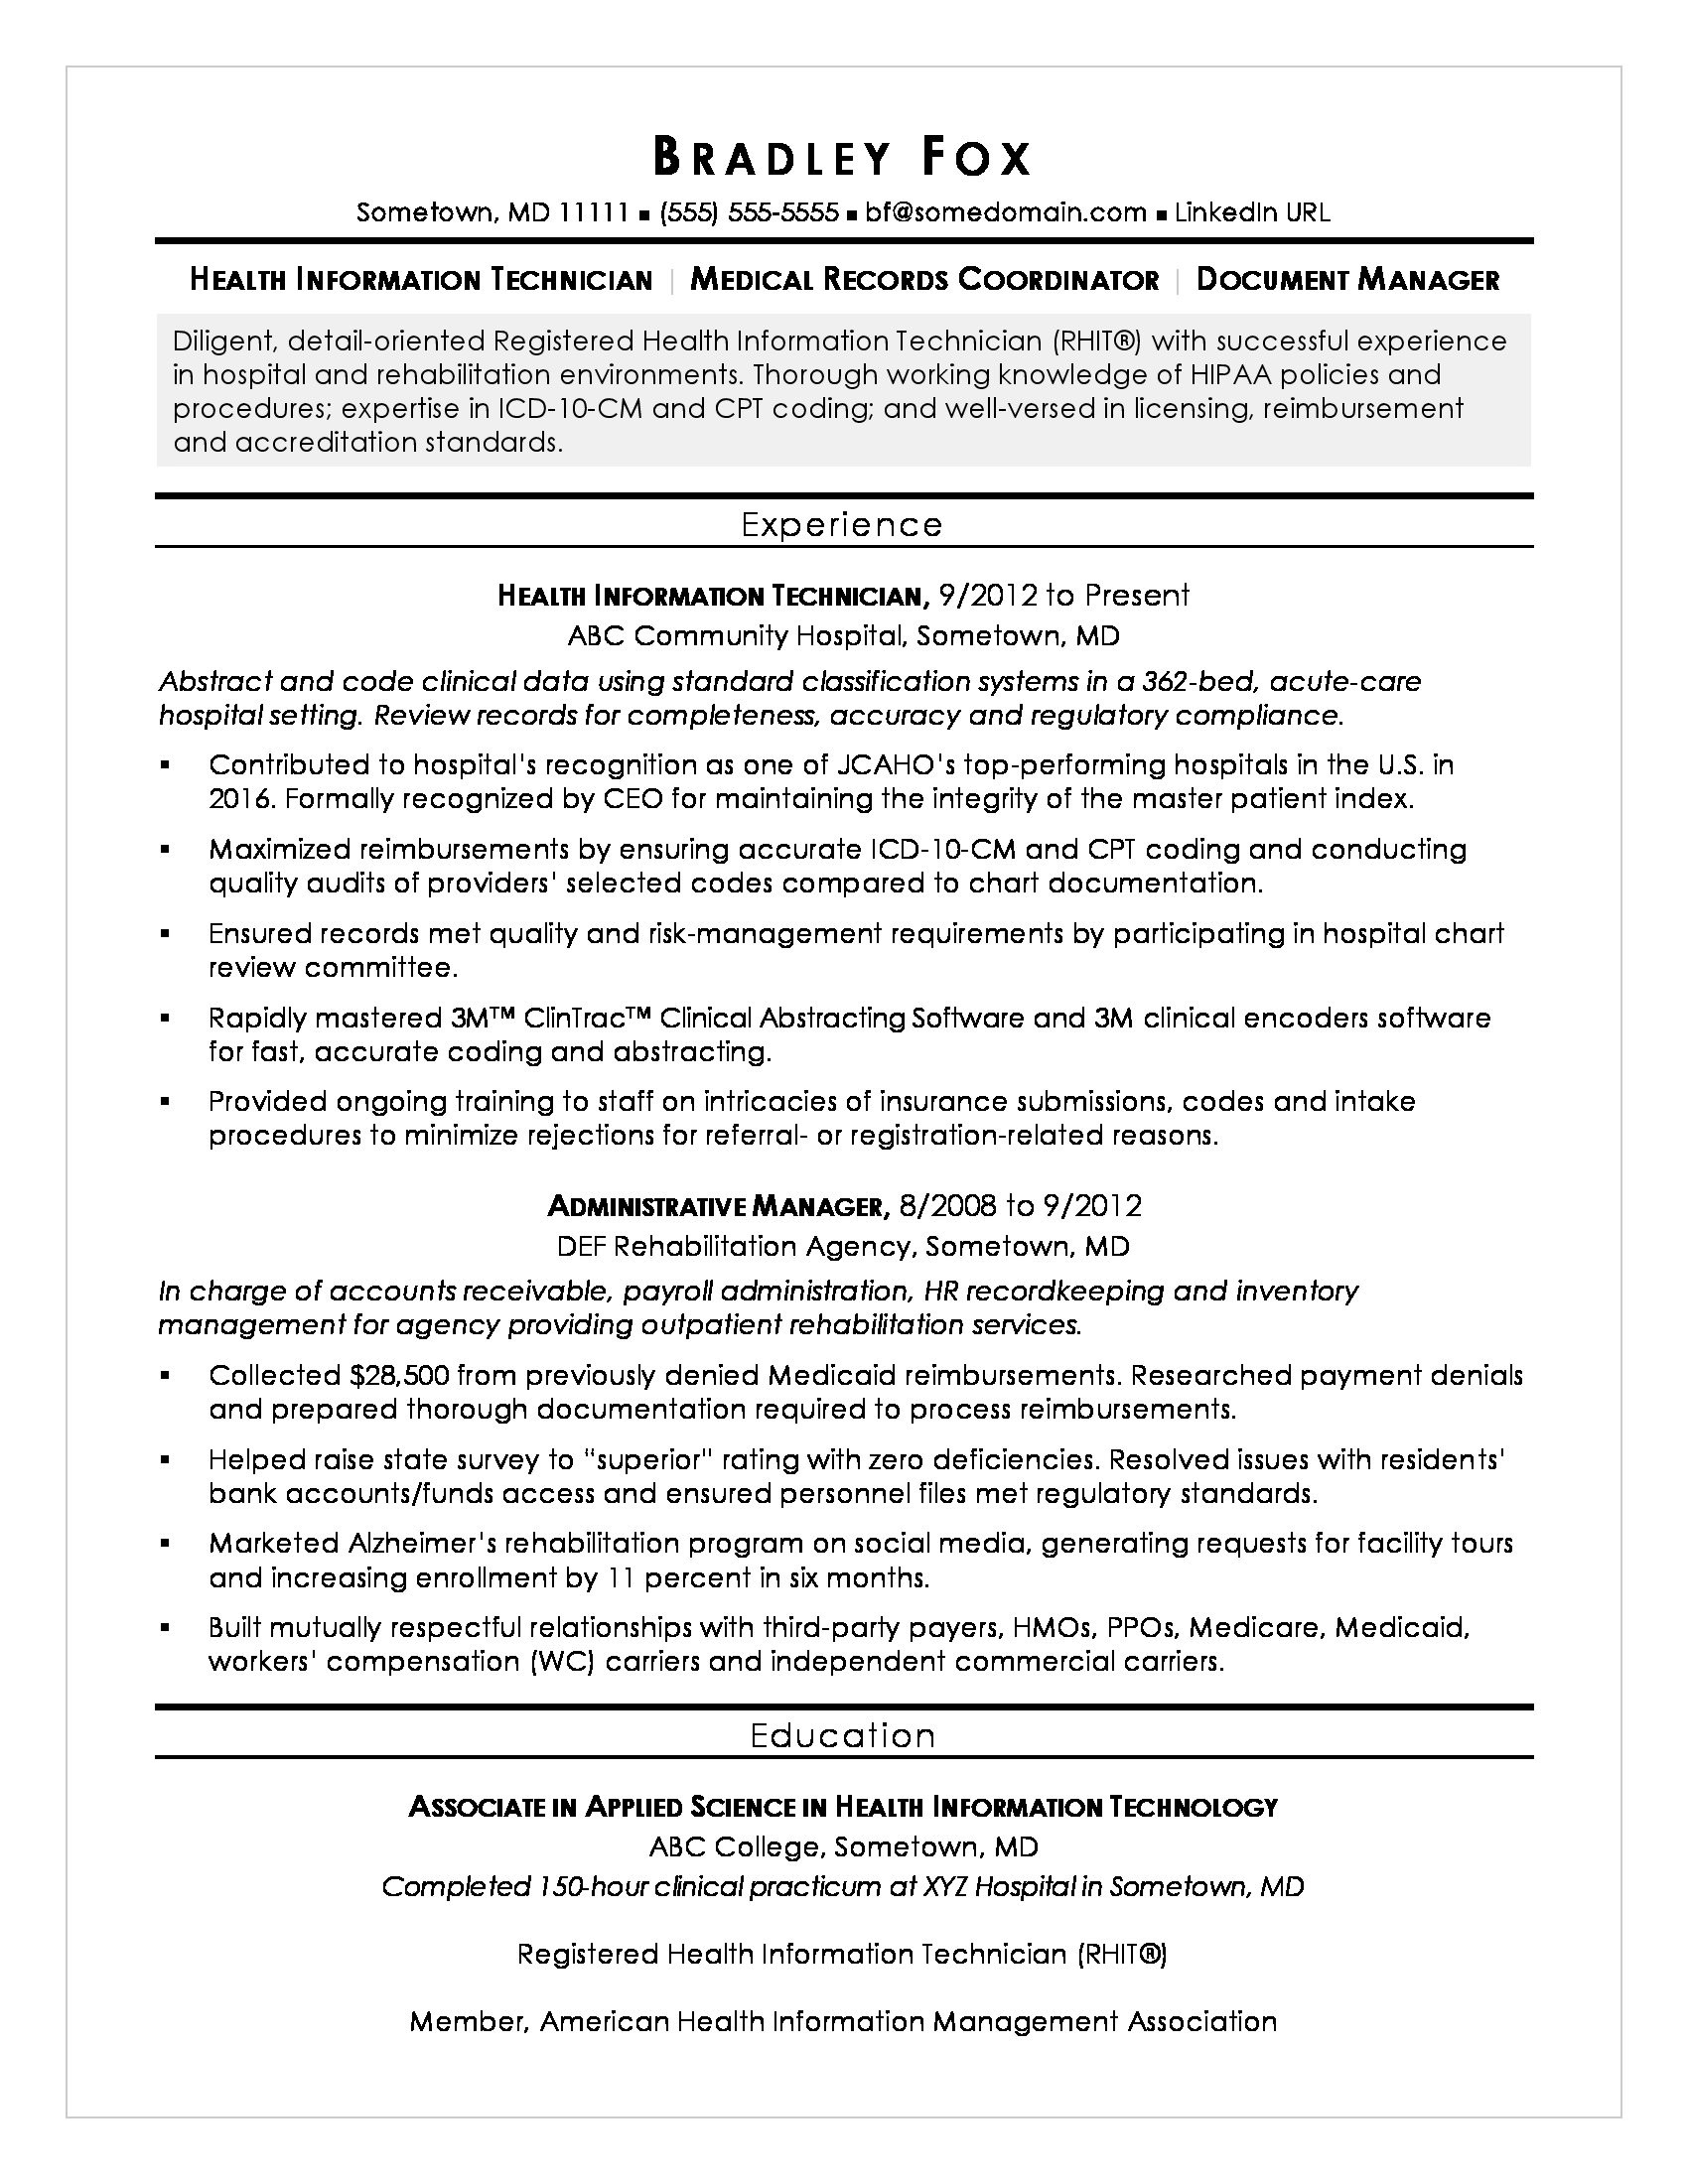 Sample Resume for Healthcare It Jobs Health Information Technician Sample Resume Monster.com